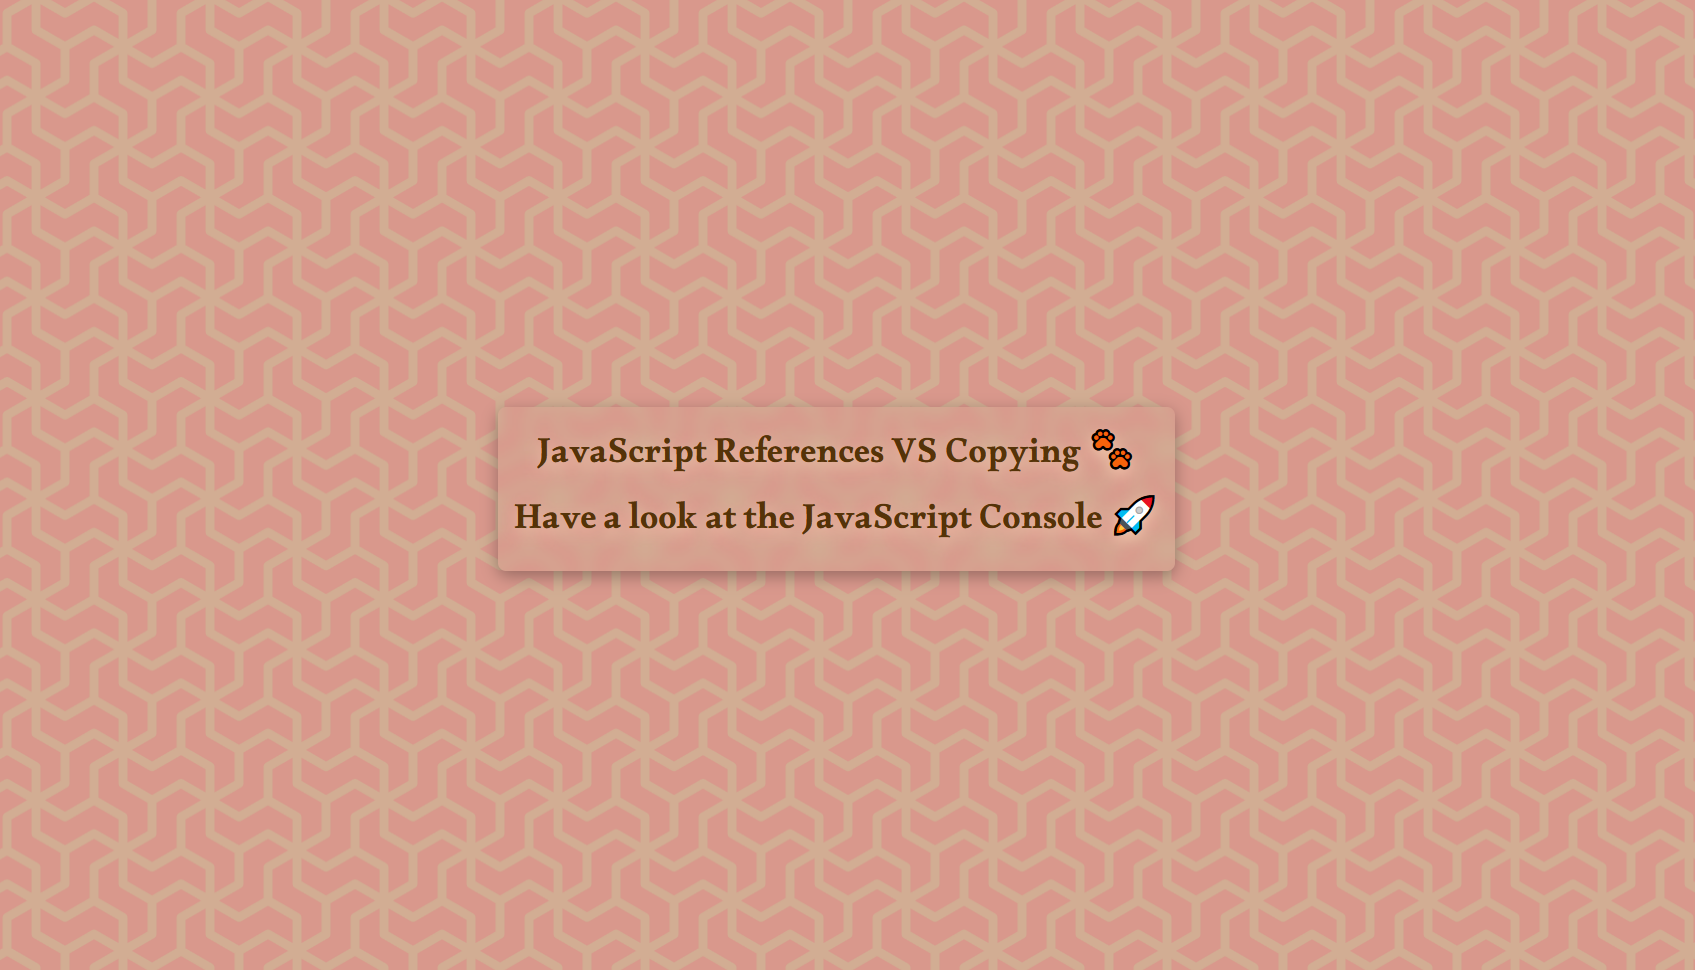 #14 JavaScript References VS Copying